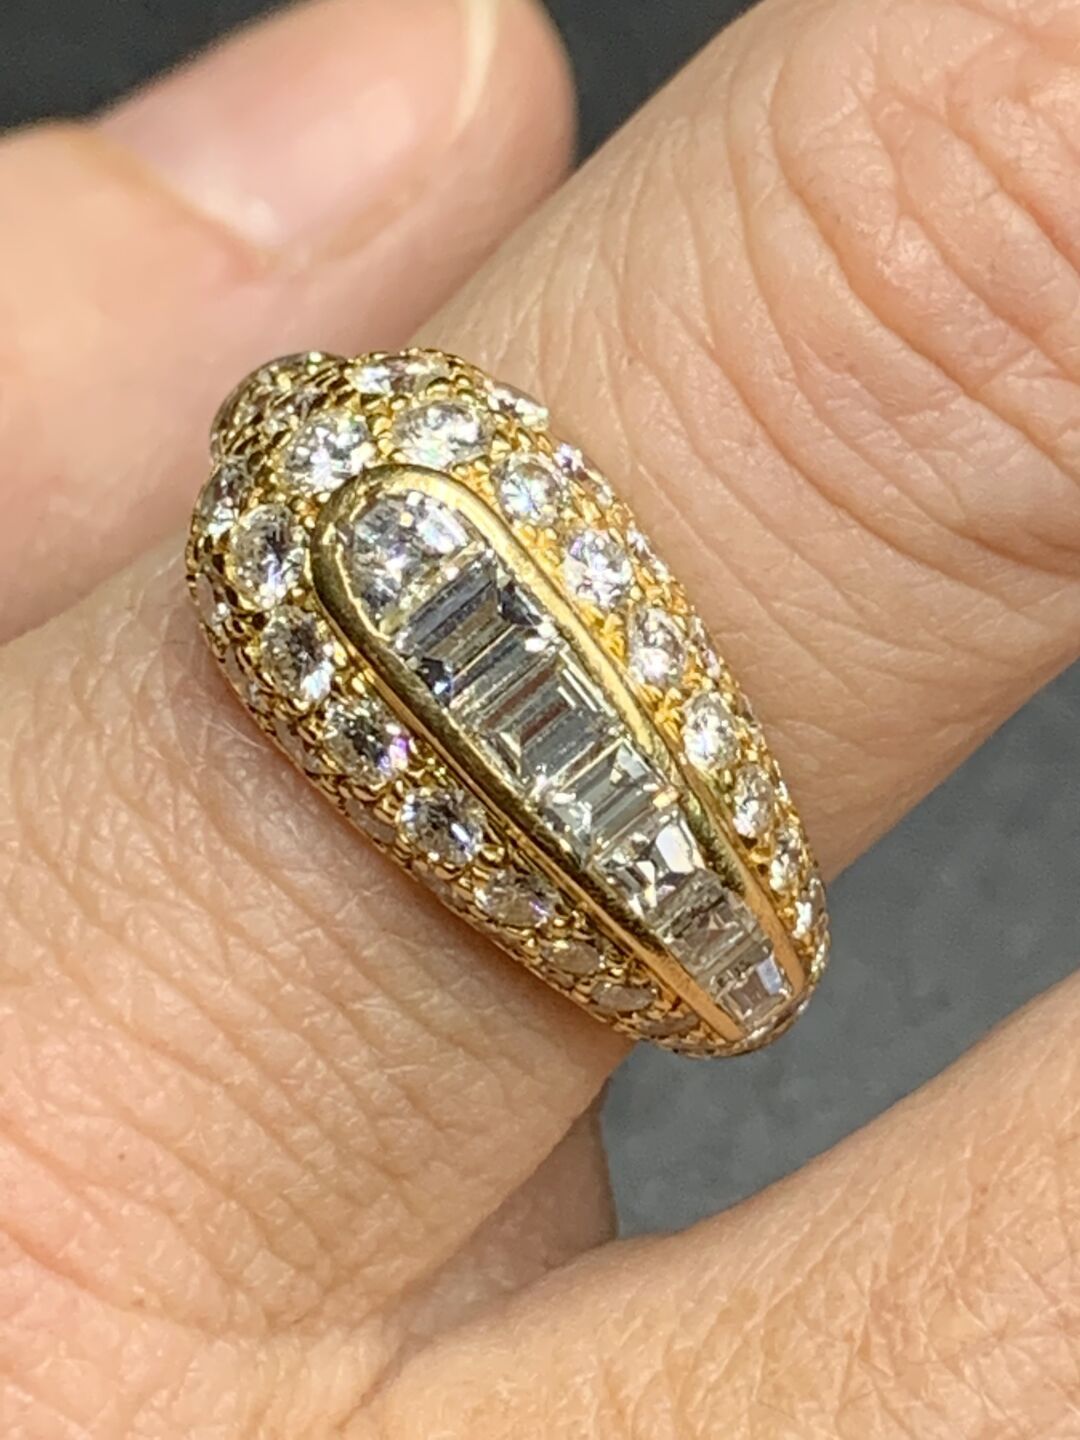 Null 一枚750/°°5.70g Tdd 55的黄金戒指。镶嵌了6颗长方形钻石，约1克拉，一颗圆钻约0.20克拉，以及0.05克拉至0.10克拉之间的钻石铺&hellip;